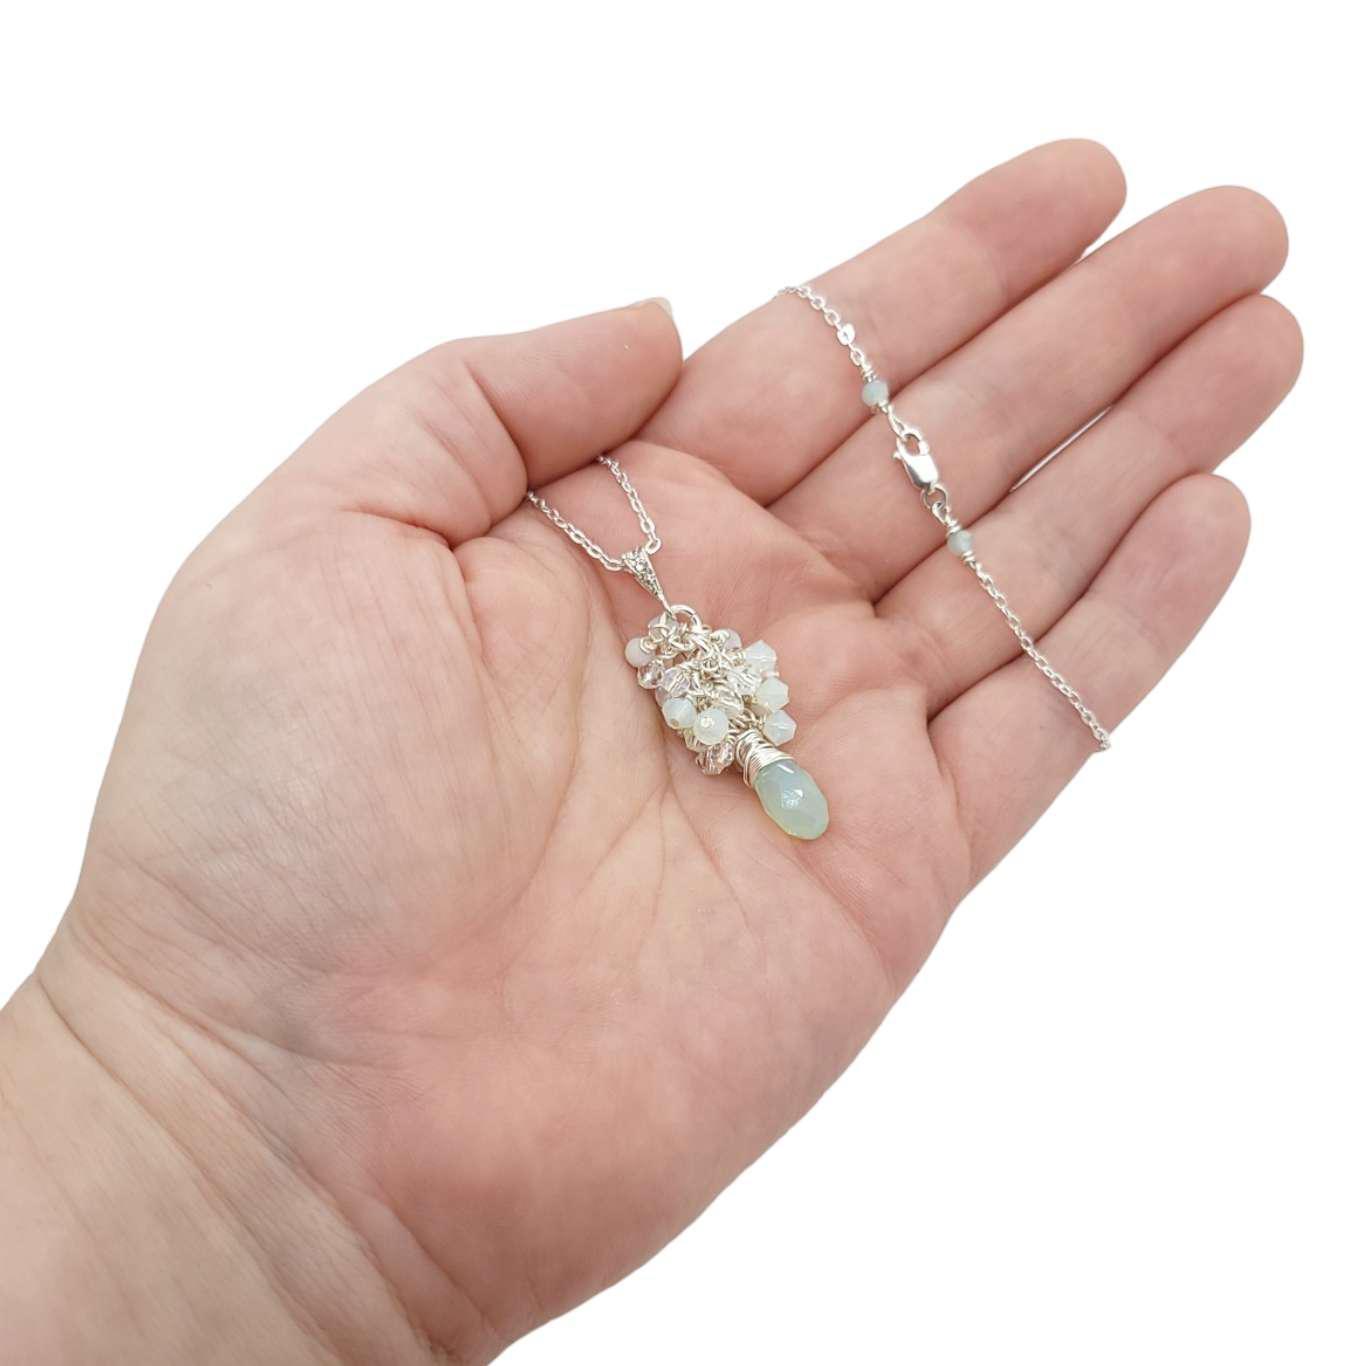 Necklace - Chrysolite Opal Crystal Teardrop Cluster by Sugar Sidewalk